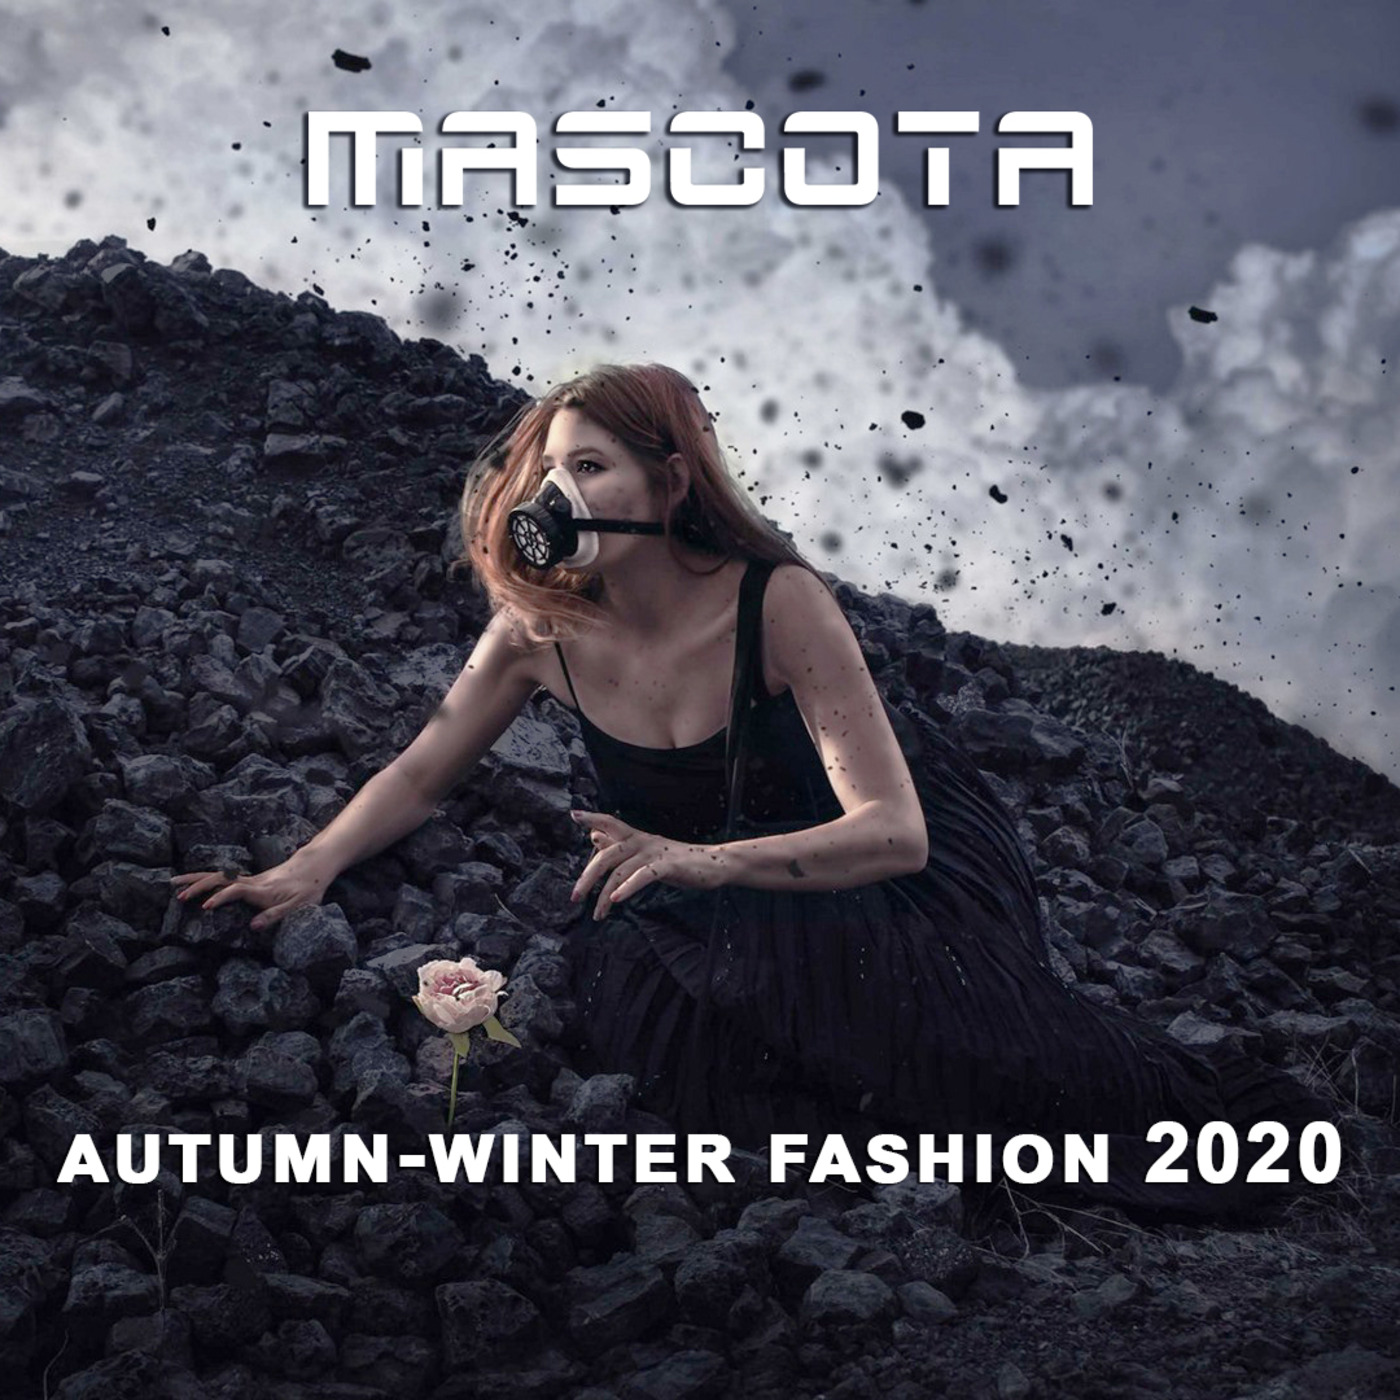 Episode 53: #53 Mascota - Autumn-Winter Fashion 2020